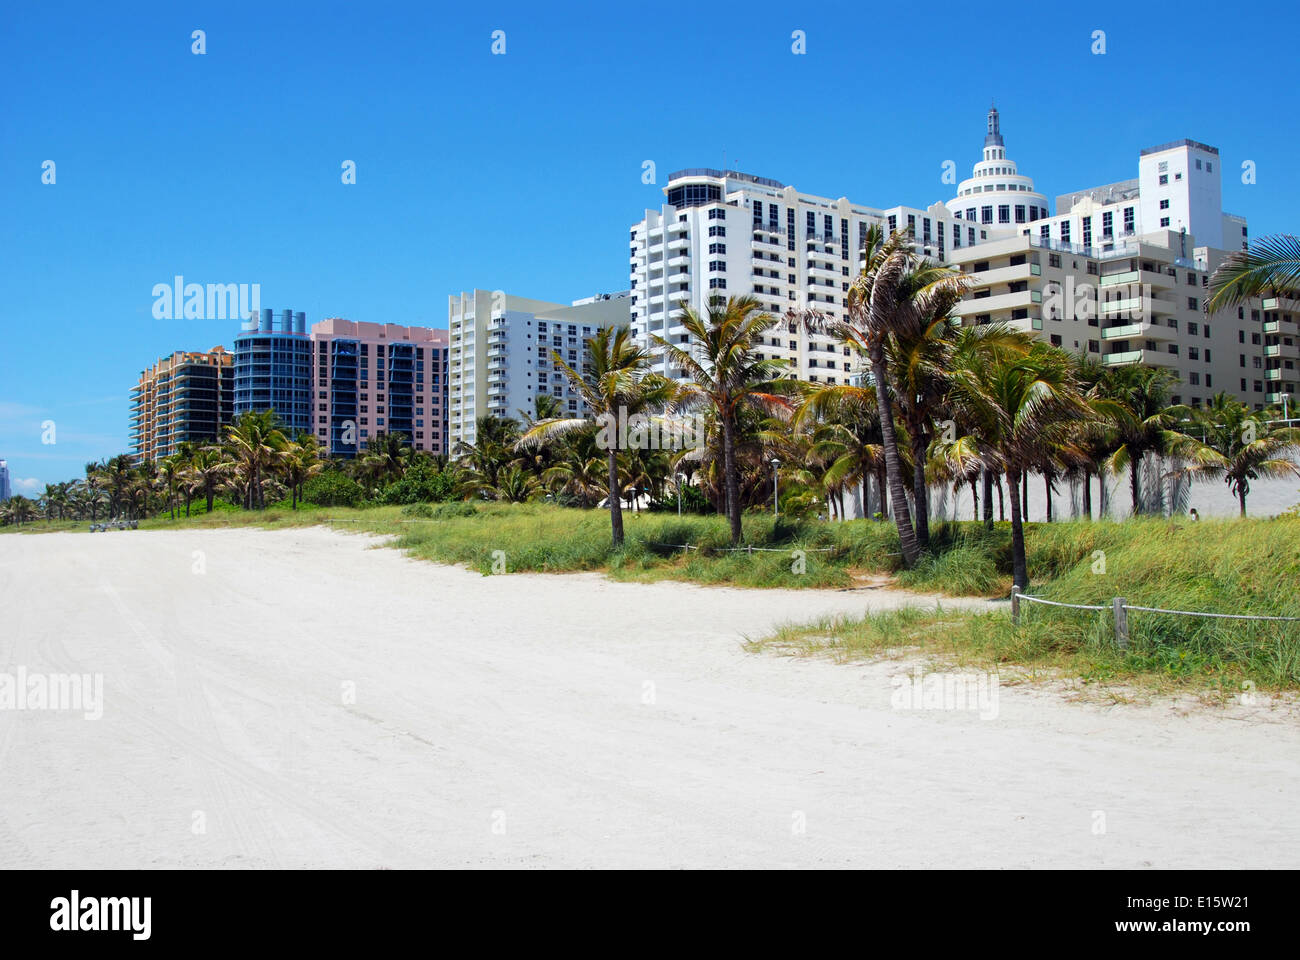 Hotels along the sandy beach at Miami Beach, Florida Stock Photo